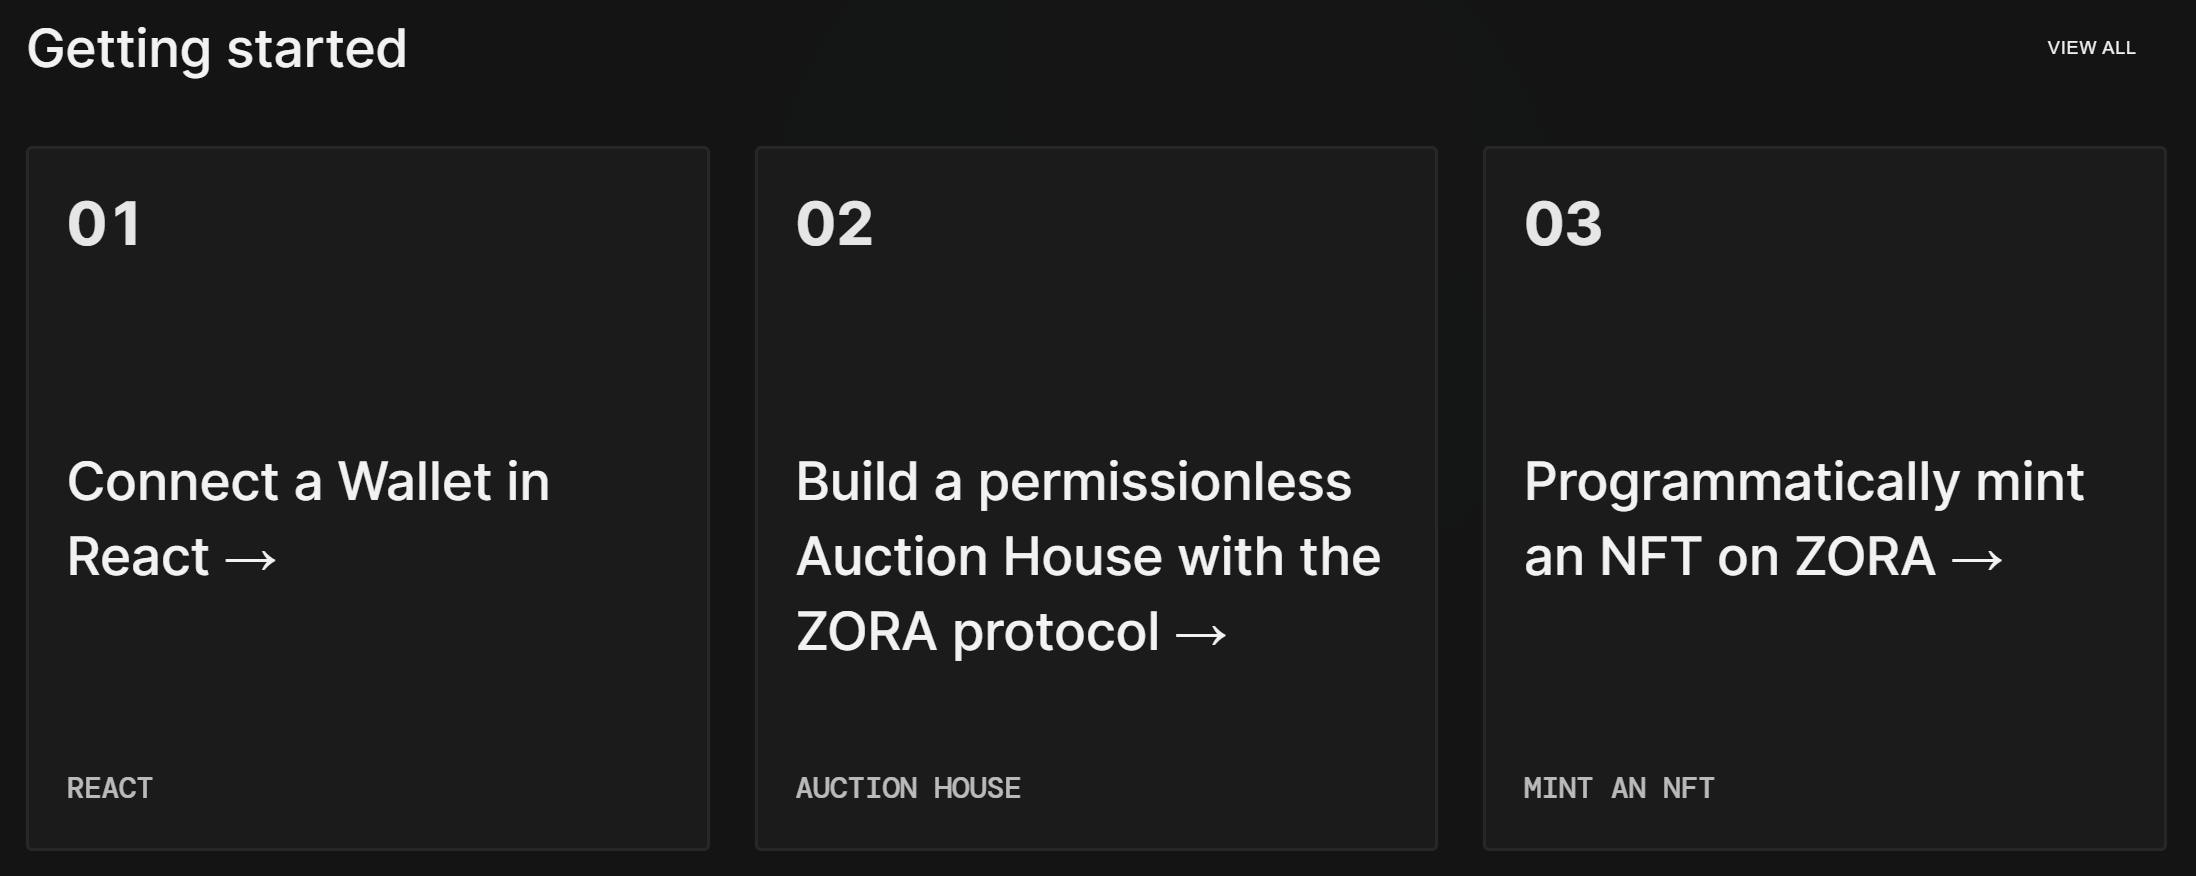 Zora product / service